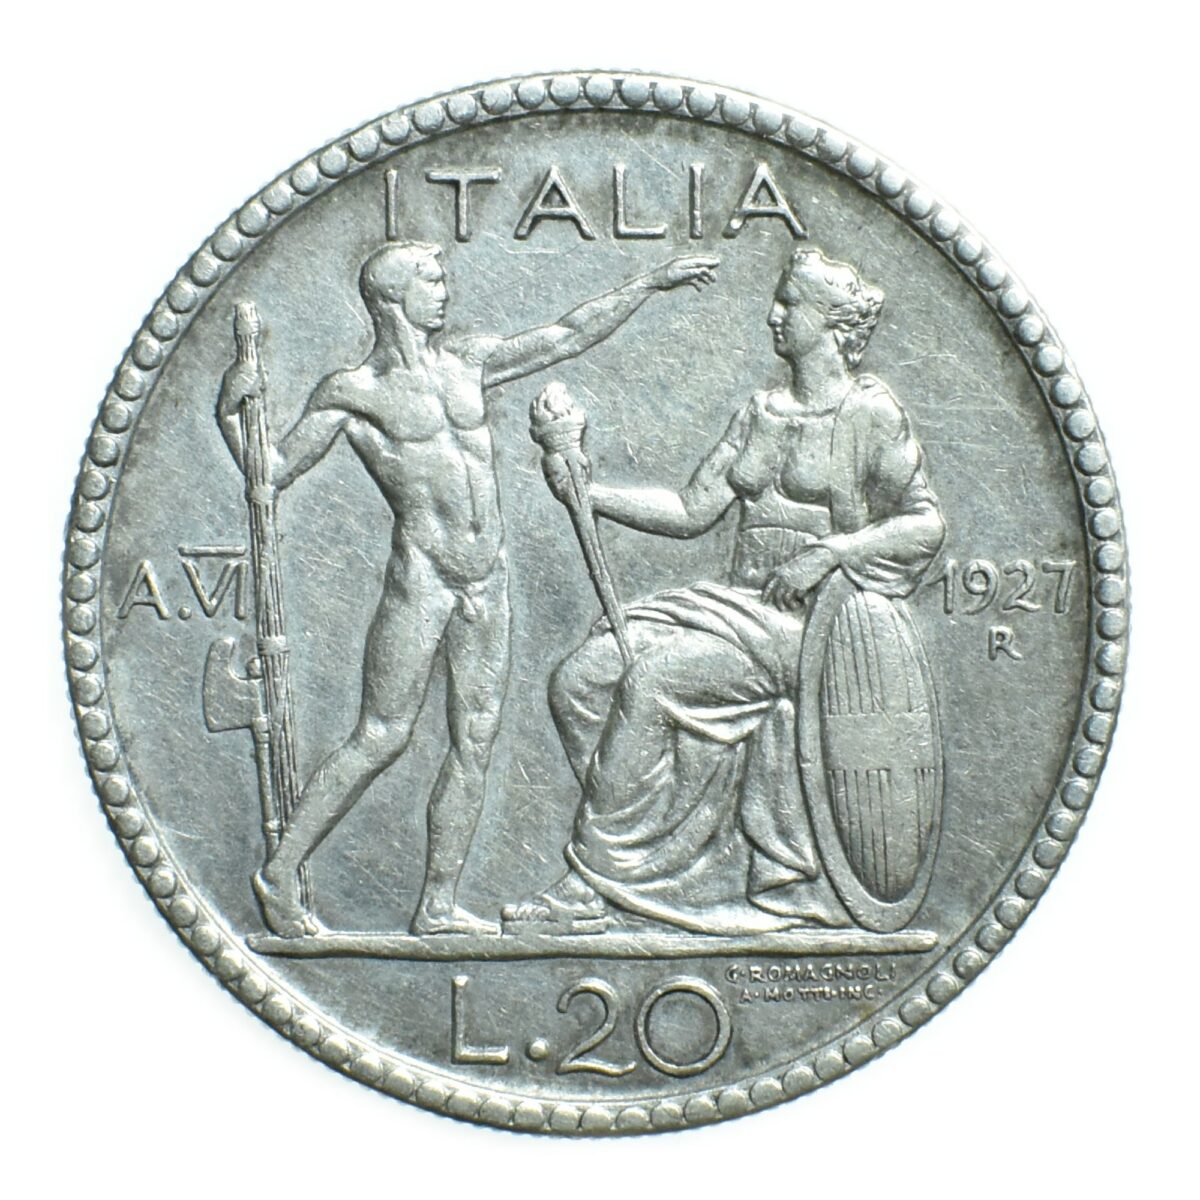 Italie 20lire 1927 avers 388